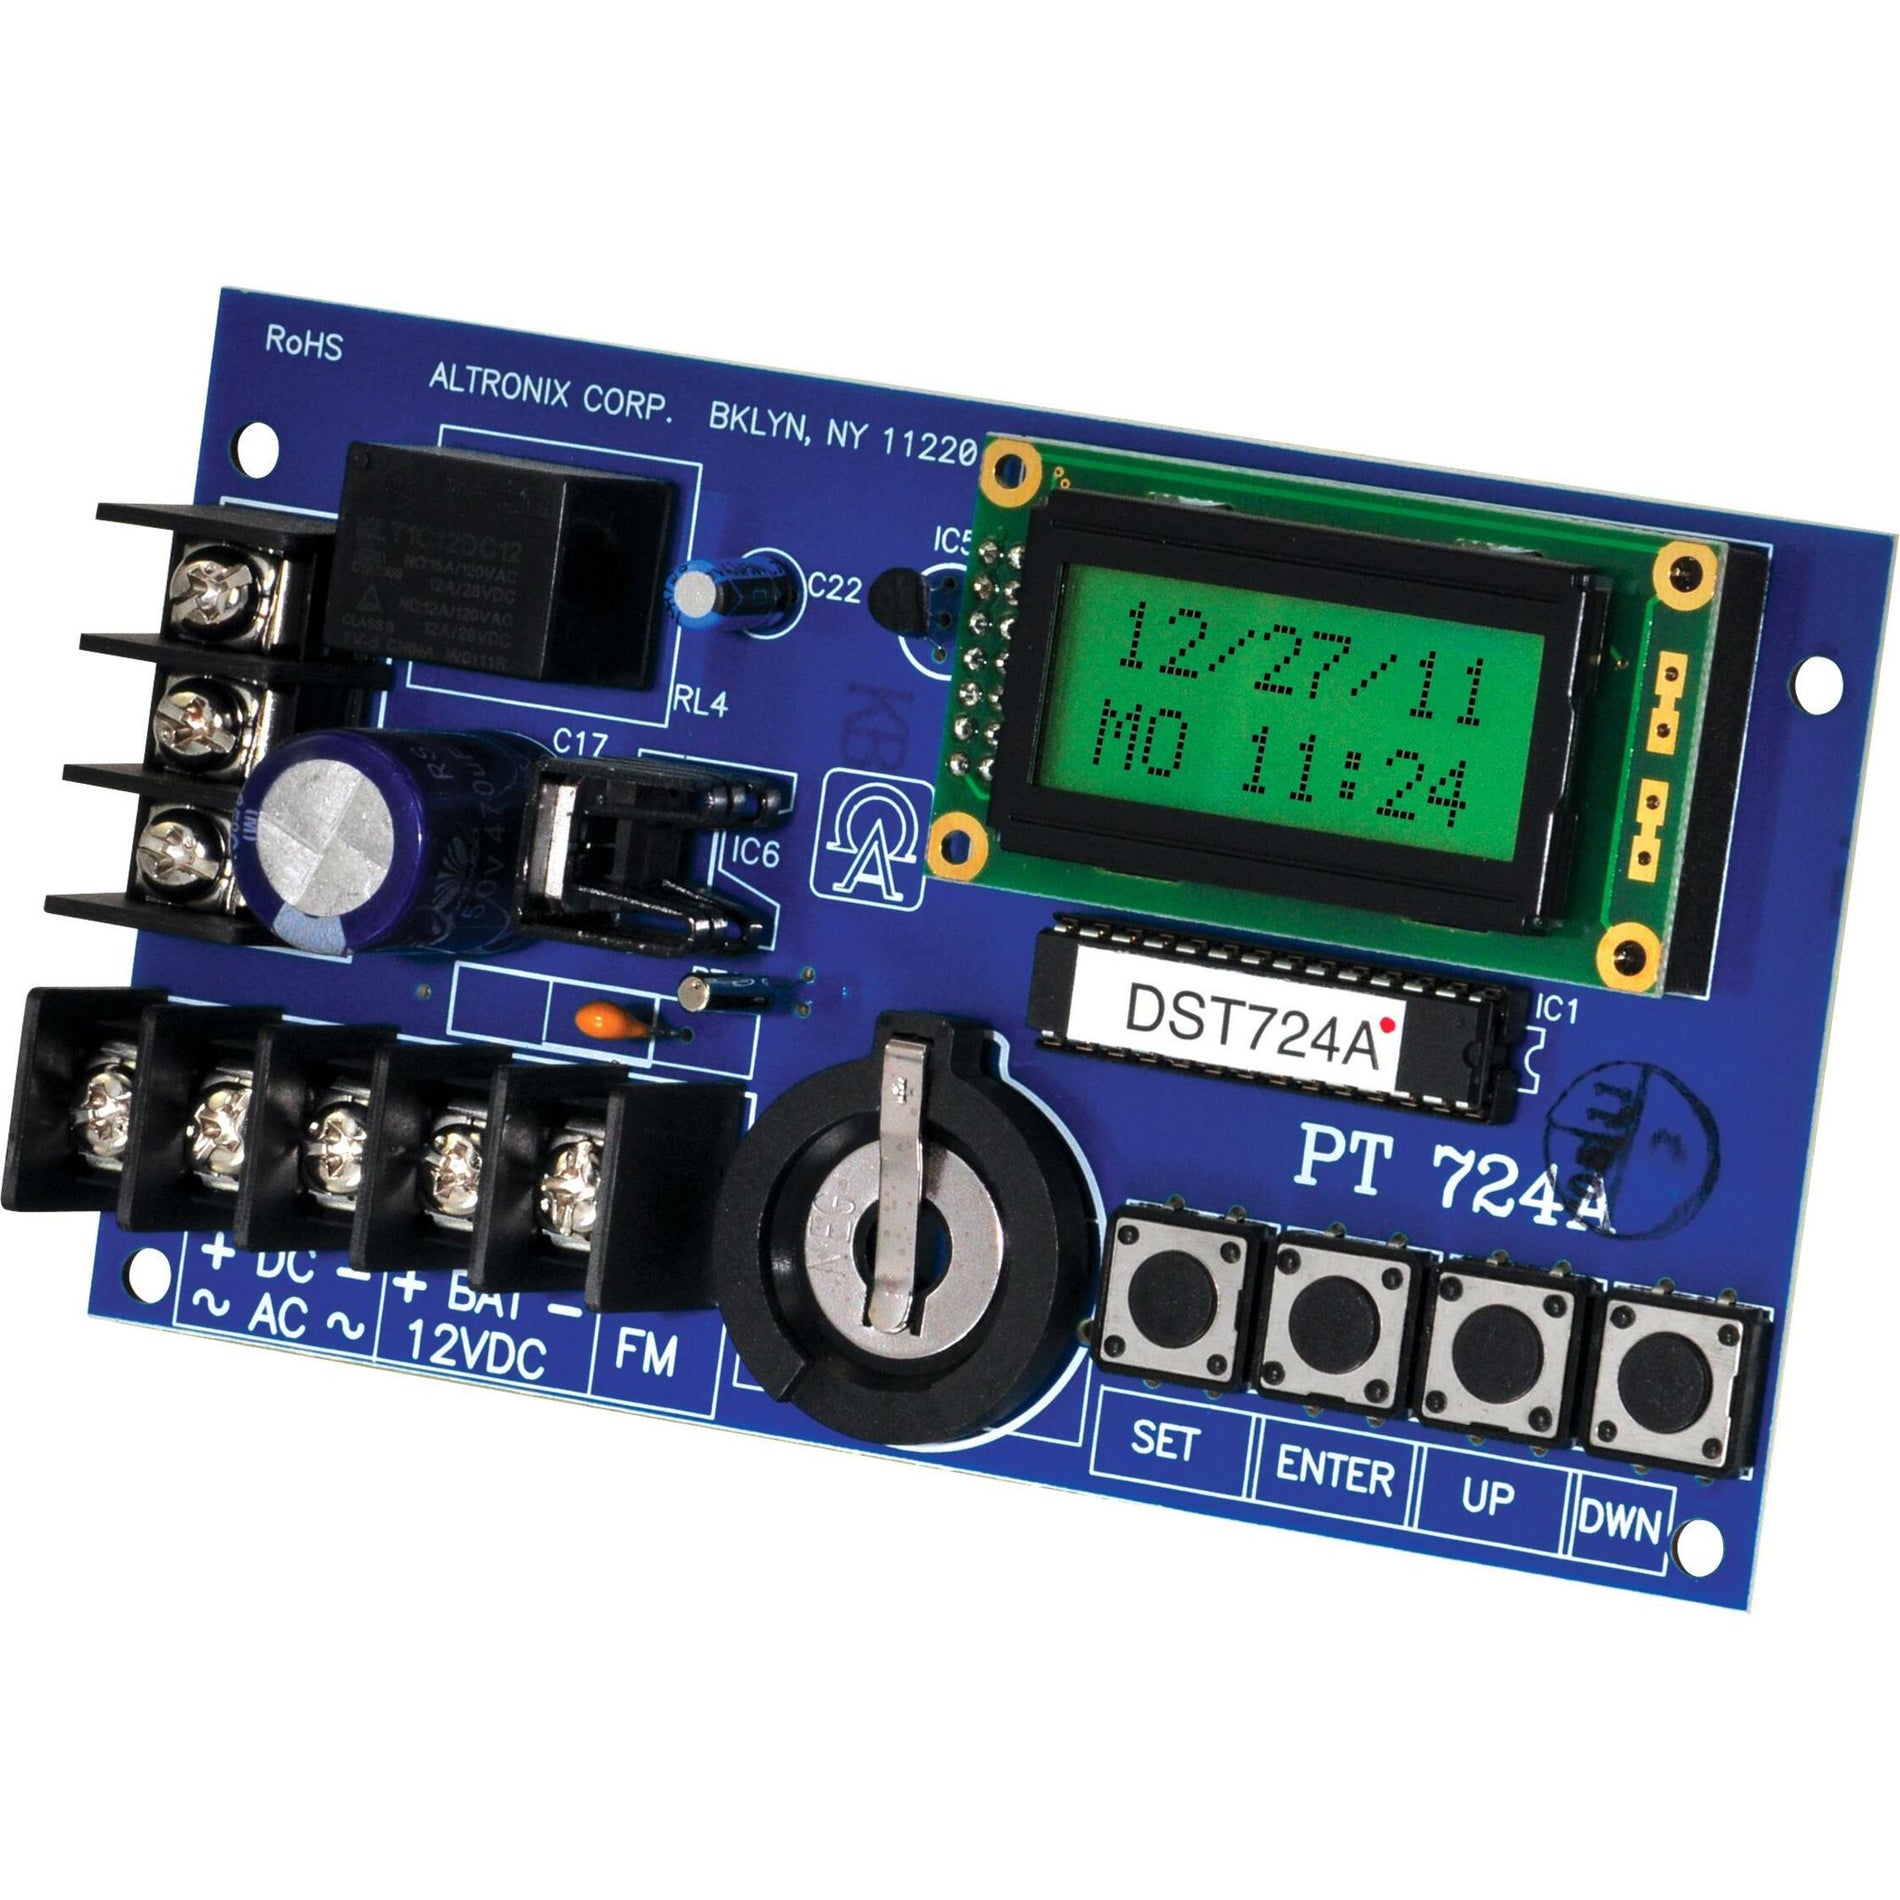 Altronix PT724A Digital Timer, LCD Display, Lifetime Warranty